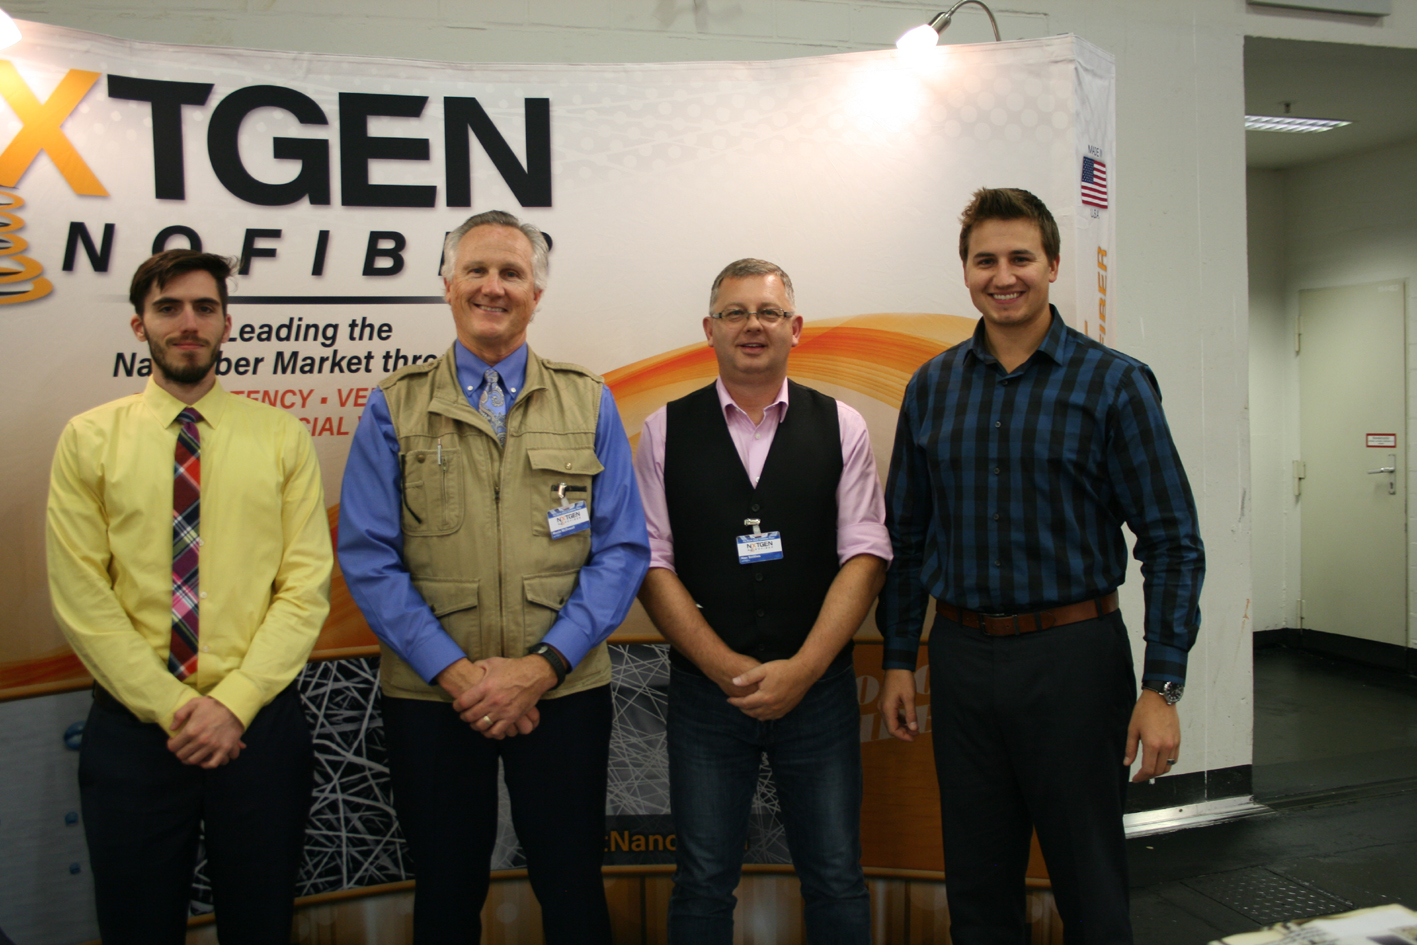 The Nxtgen team – a new name in nanofibres.